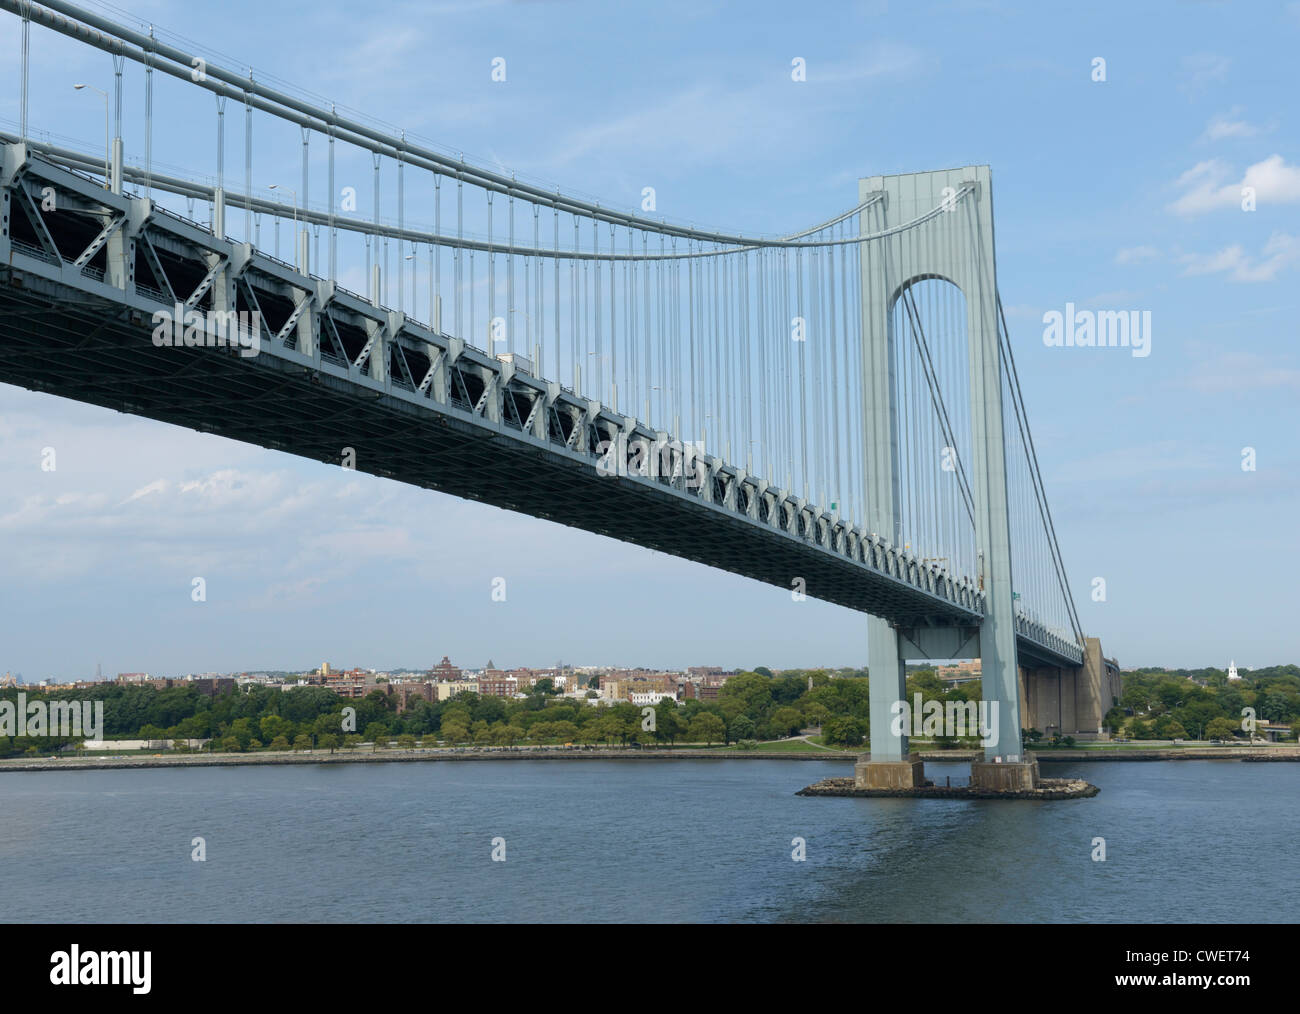 Le pont Verrazano-Narrows, reliant Brooklyn et Staten Island, NY Banque D'Images